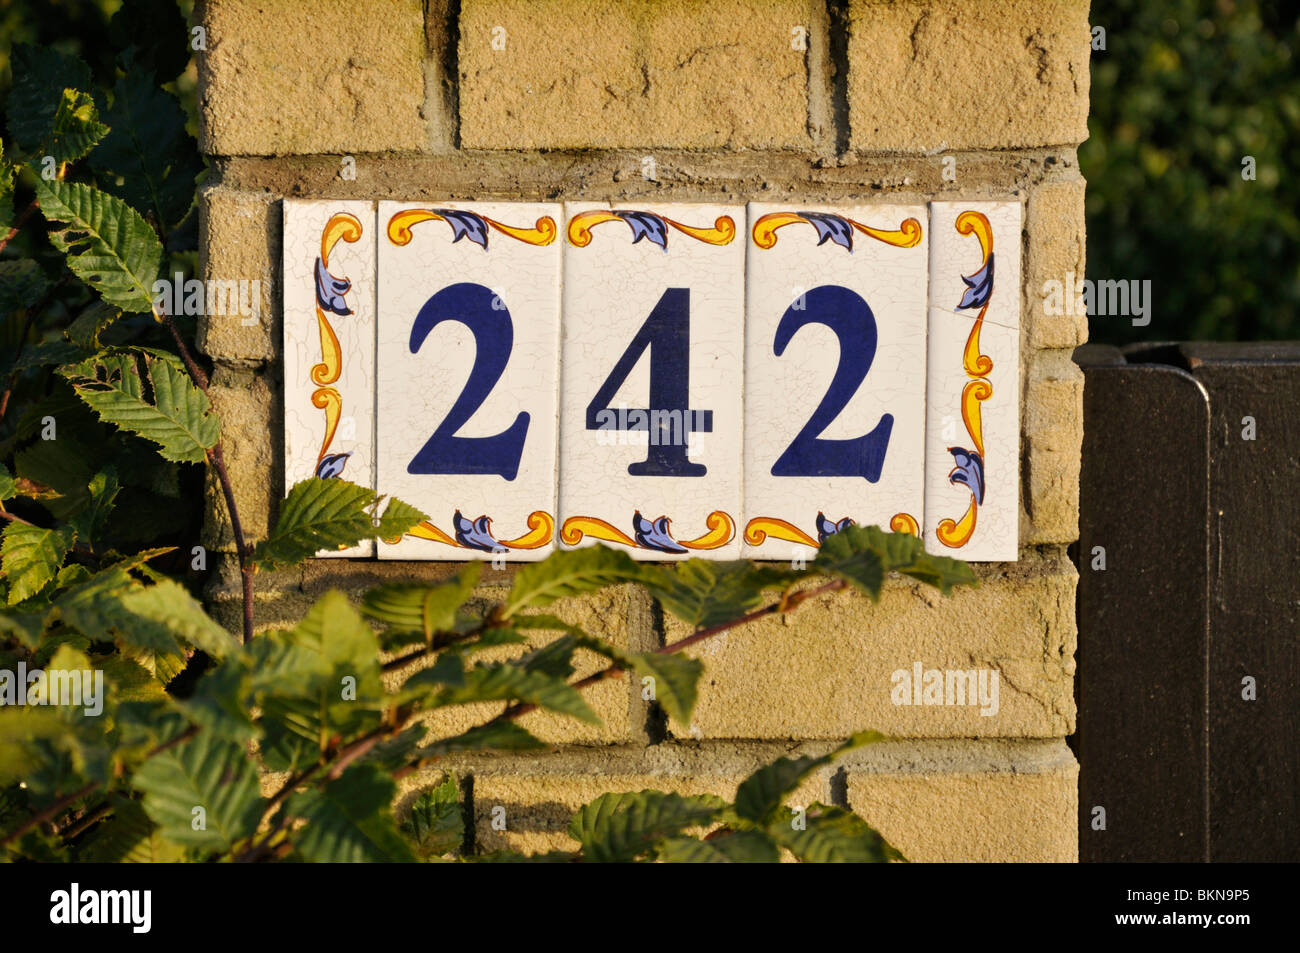 Garden number made of enamel Stock Photo